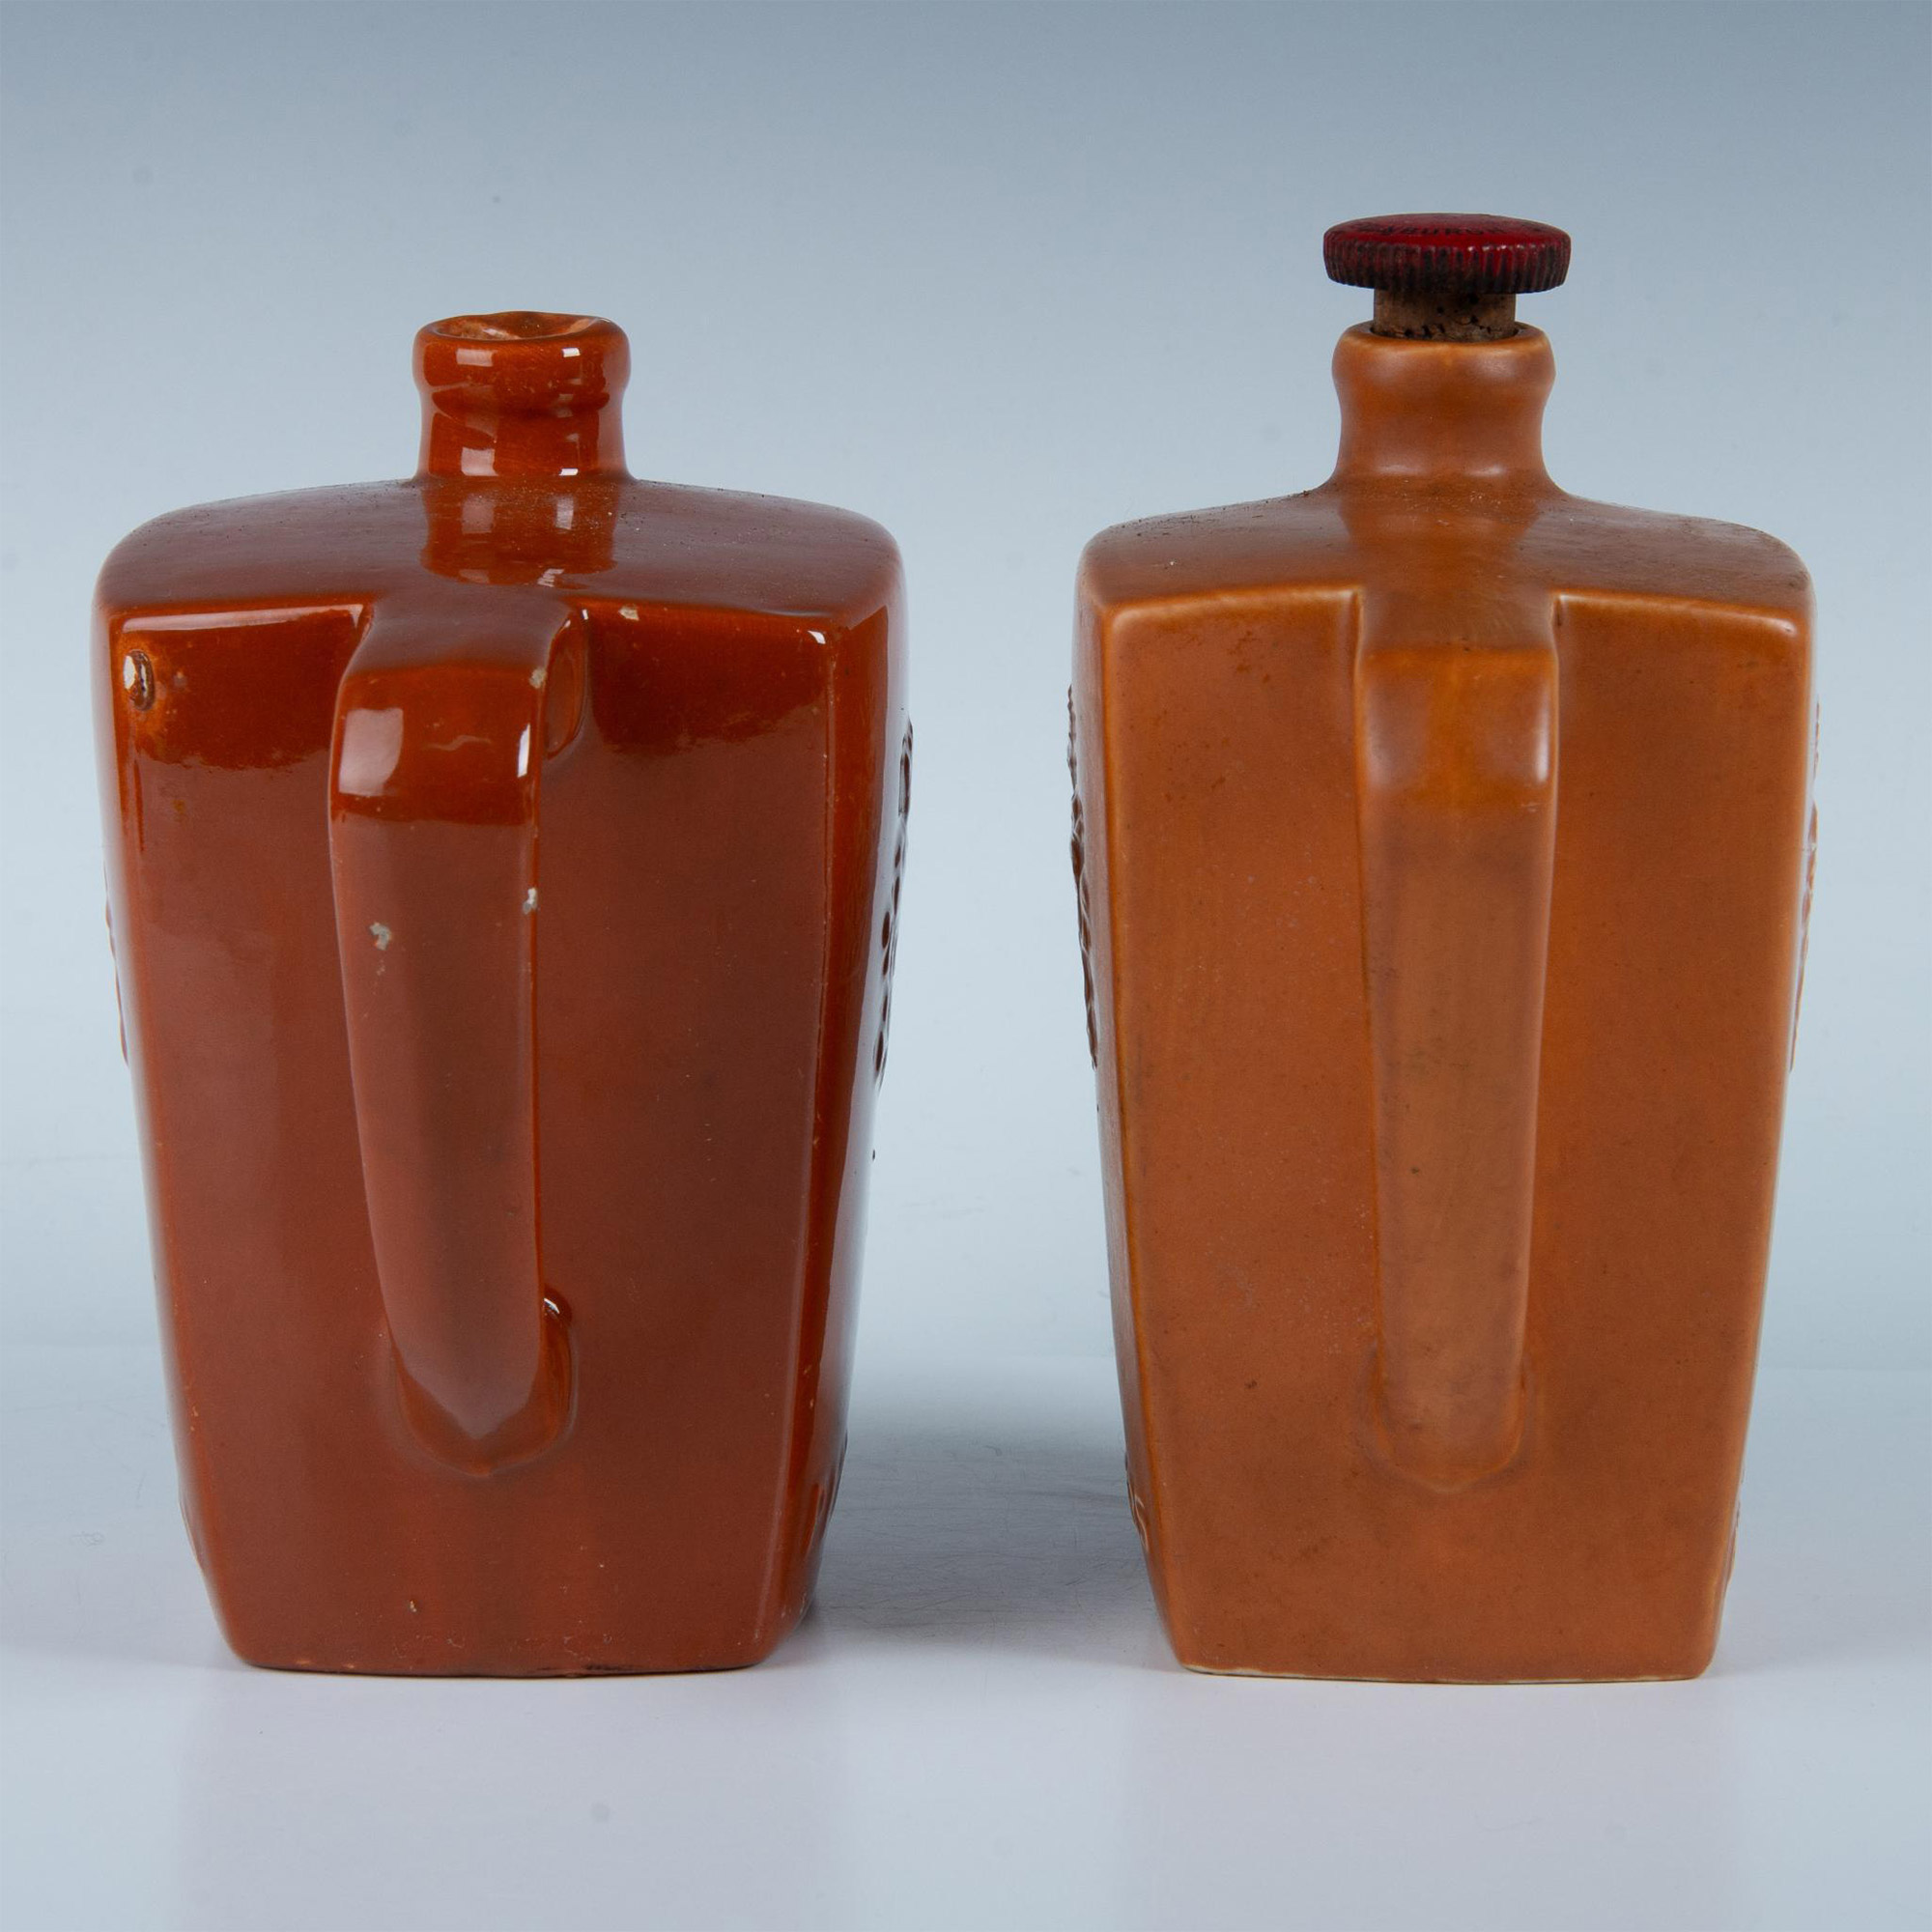 2pc Vintage Ceramic Peter's Old Valley Whisky Bottles - Image 3 of 6